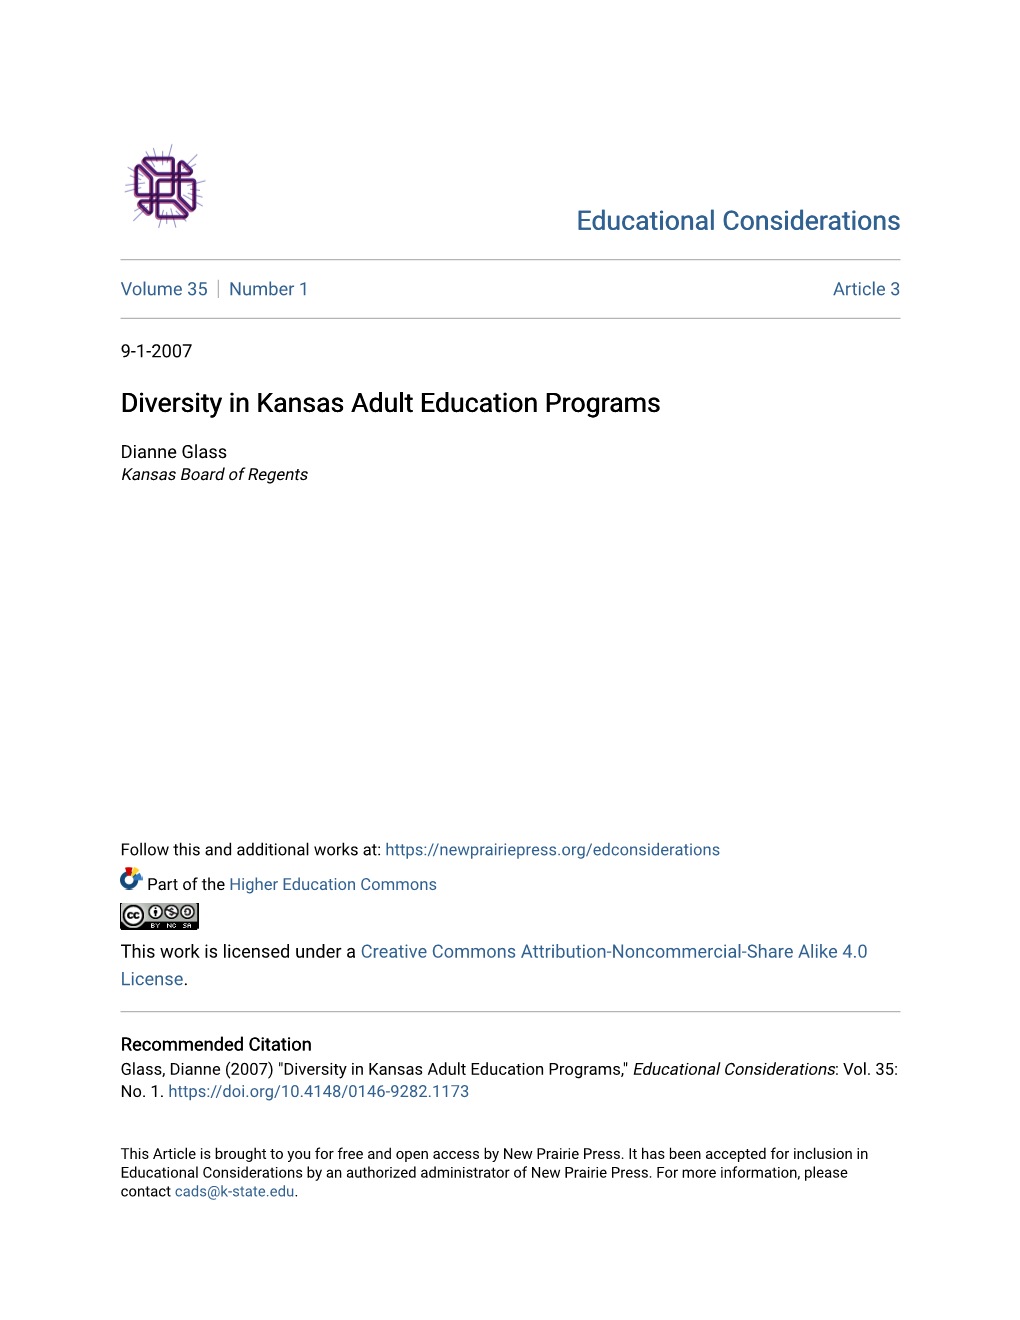 Diversity in Kansas Adult Education Programs